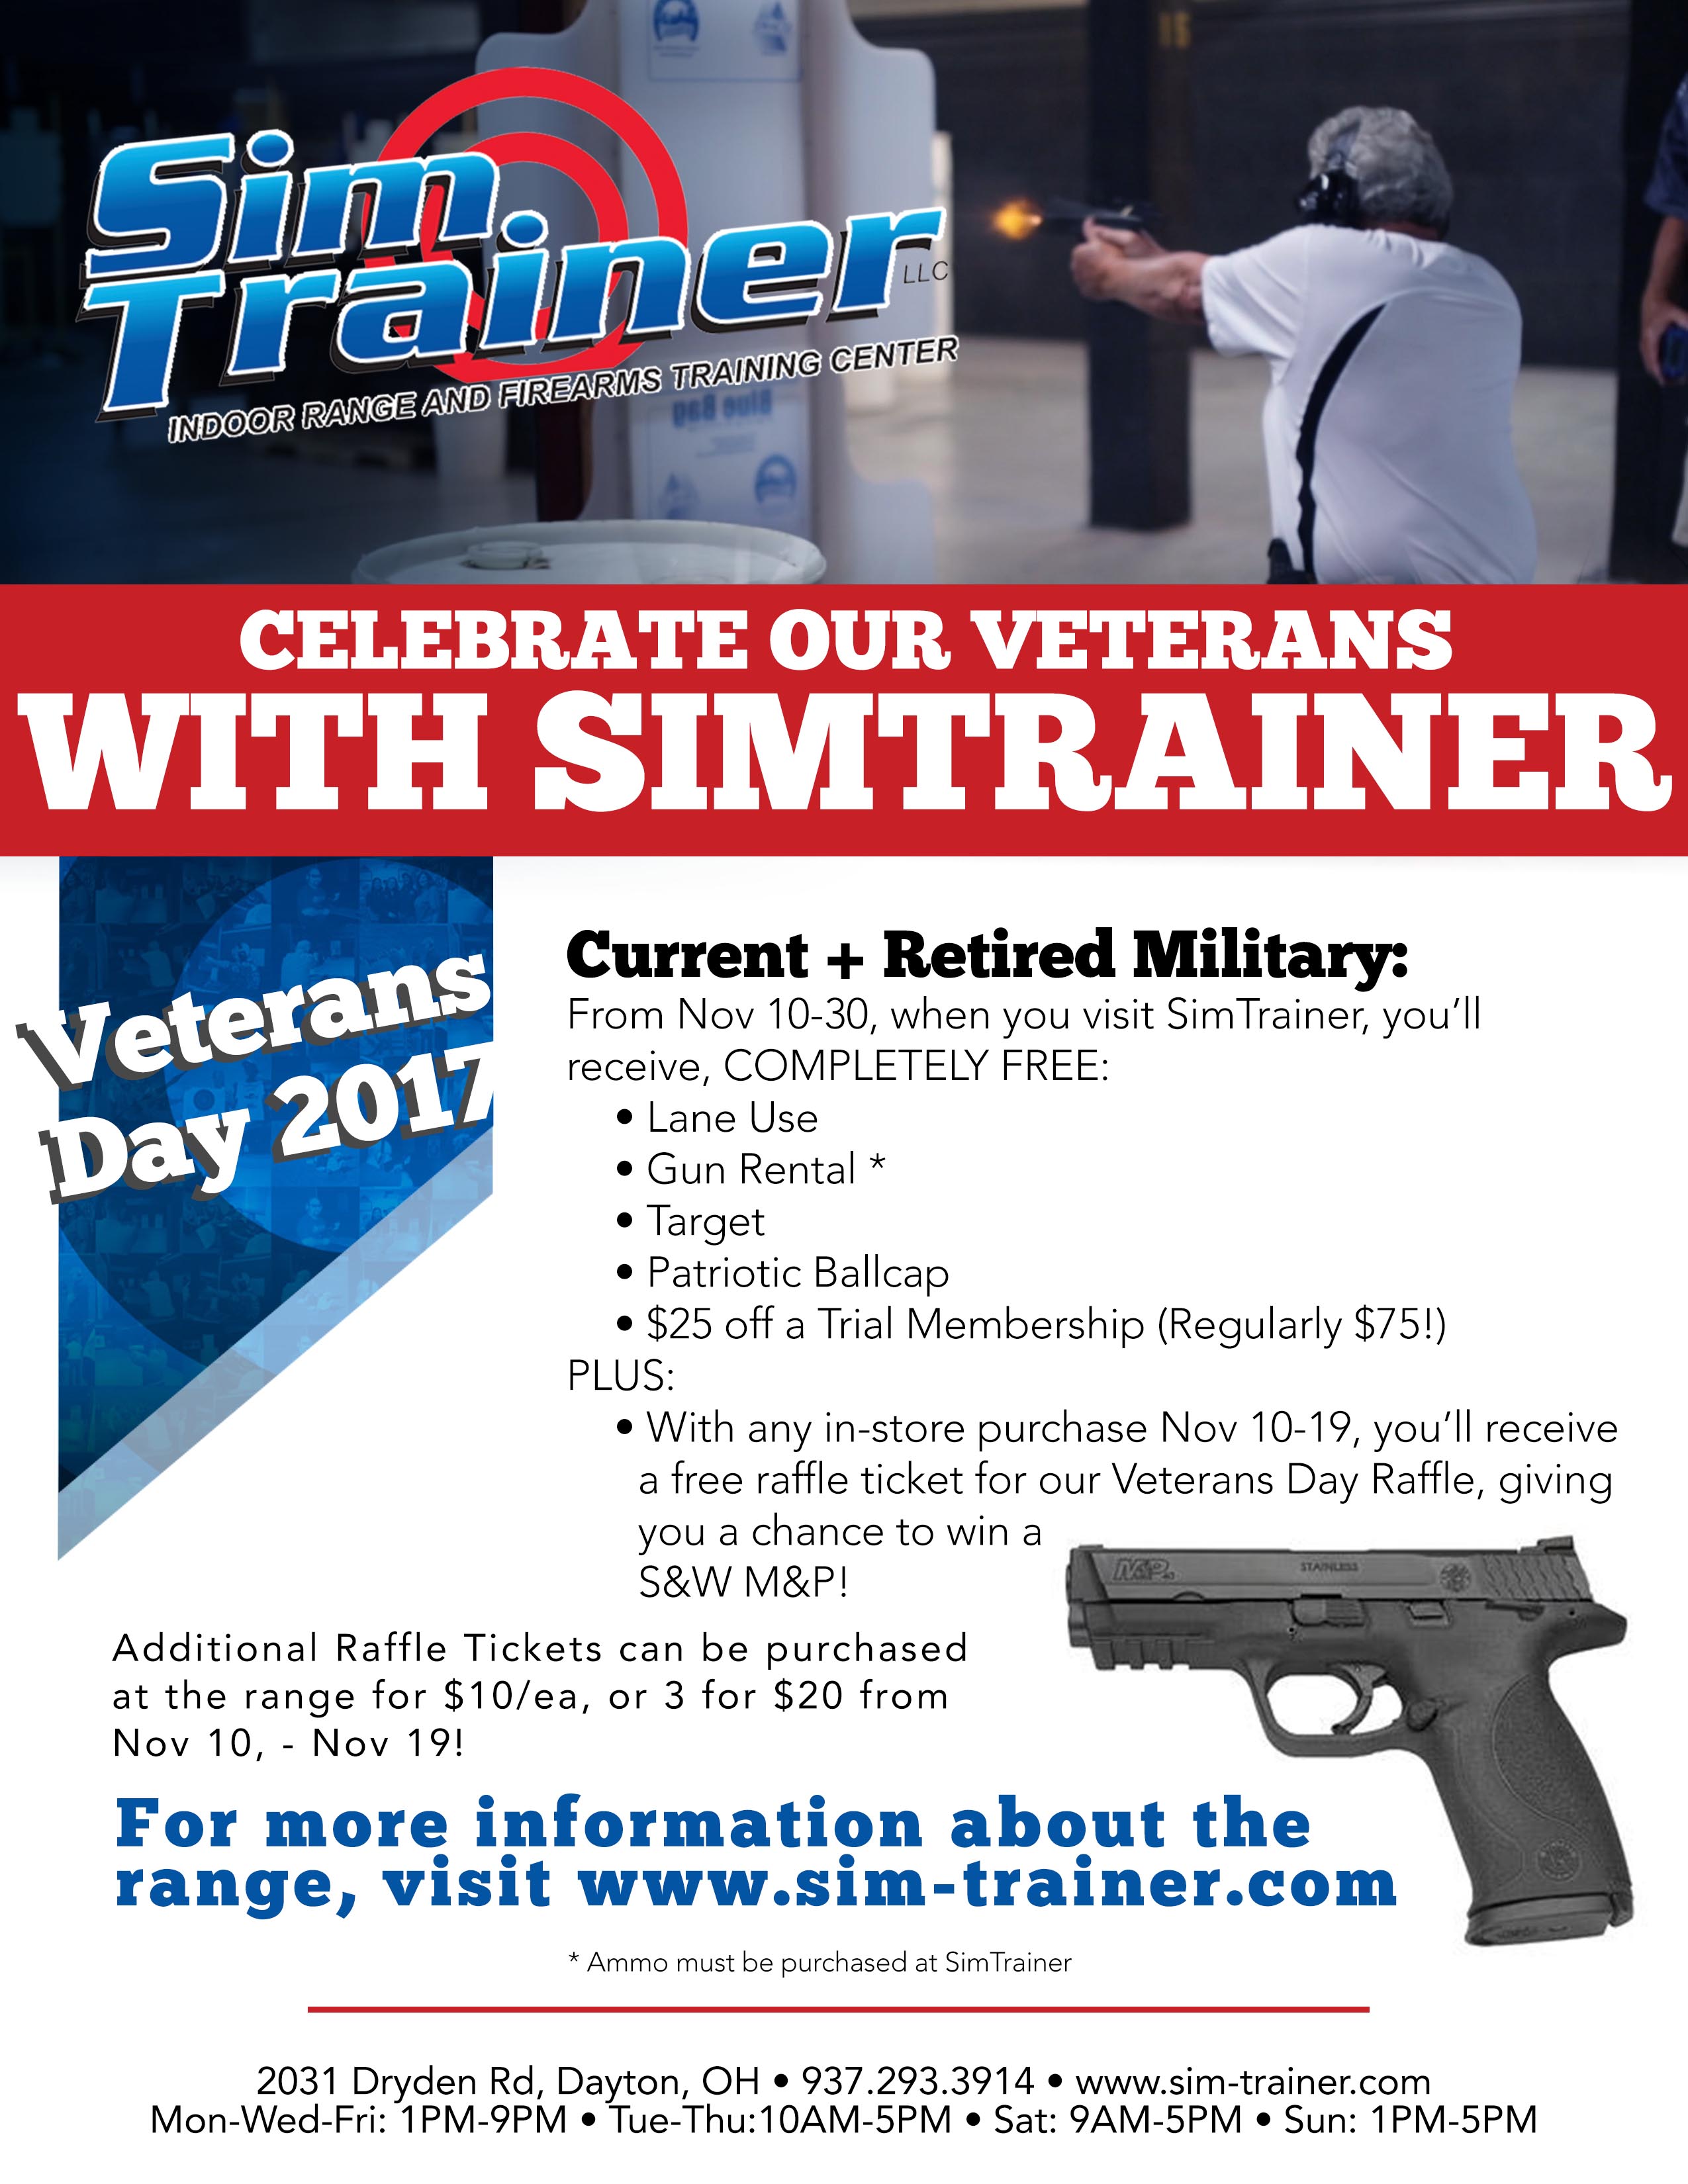 Veterans Day at SimTrainer